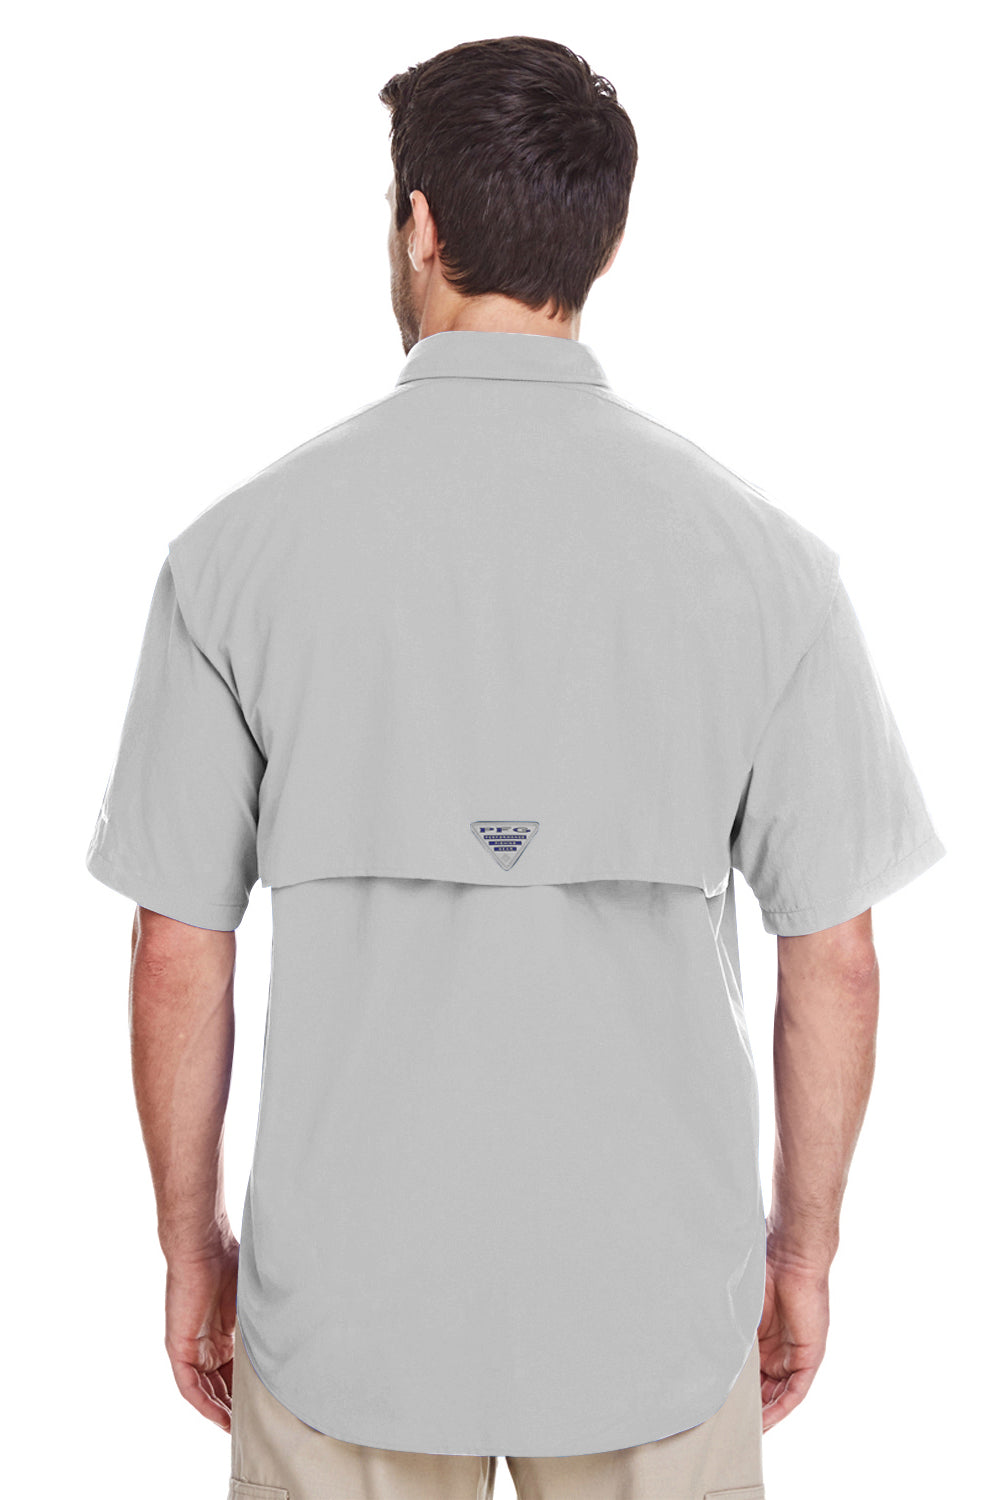 Columbia 7047 Bahama II Moisture Wicking Short Sleeve Button Down Shirt w/ Double Pockets Cool Grey Back